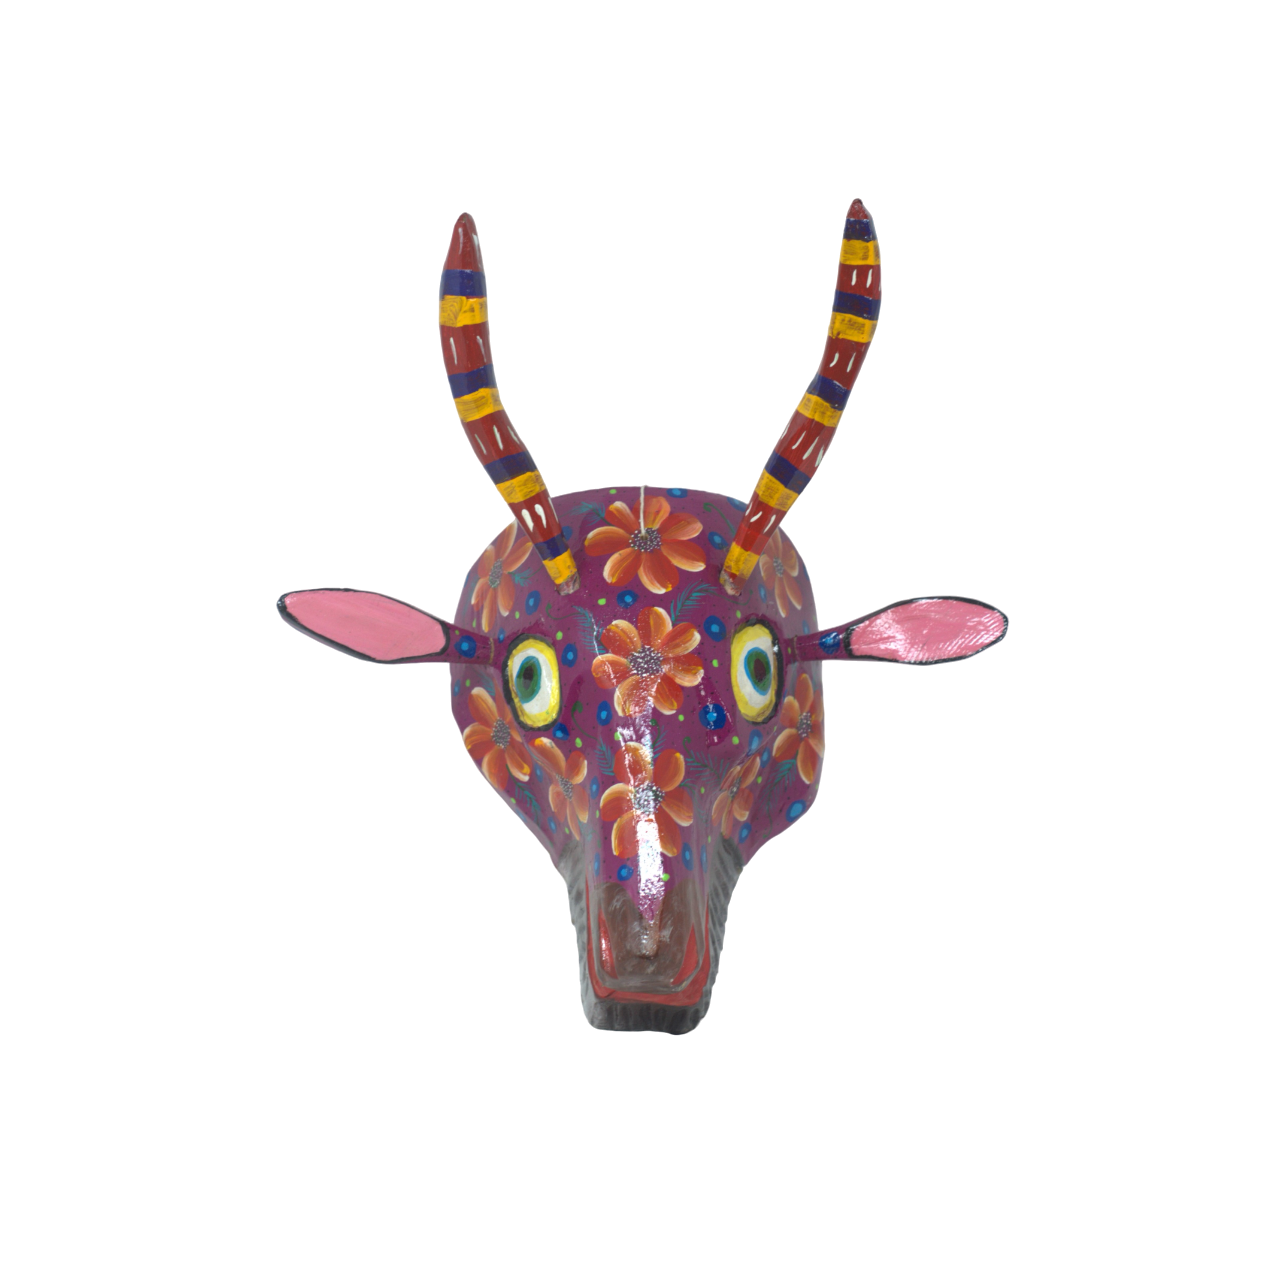 Pink Flower Goat Wall Mask, Wooden Goat Wall Mask, Goat with Goatee Wall Mask, Goatee Goat, Guatemalan Mask, Wooden Guatemalan Mask, Traditional Wooden Guatemalan Wall Mask, Wooden Wall Mask, Colorful Wooden Mask